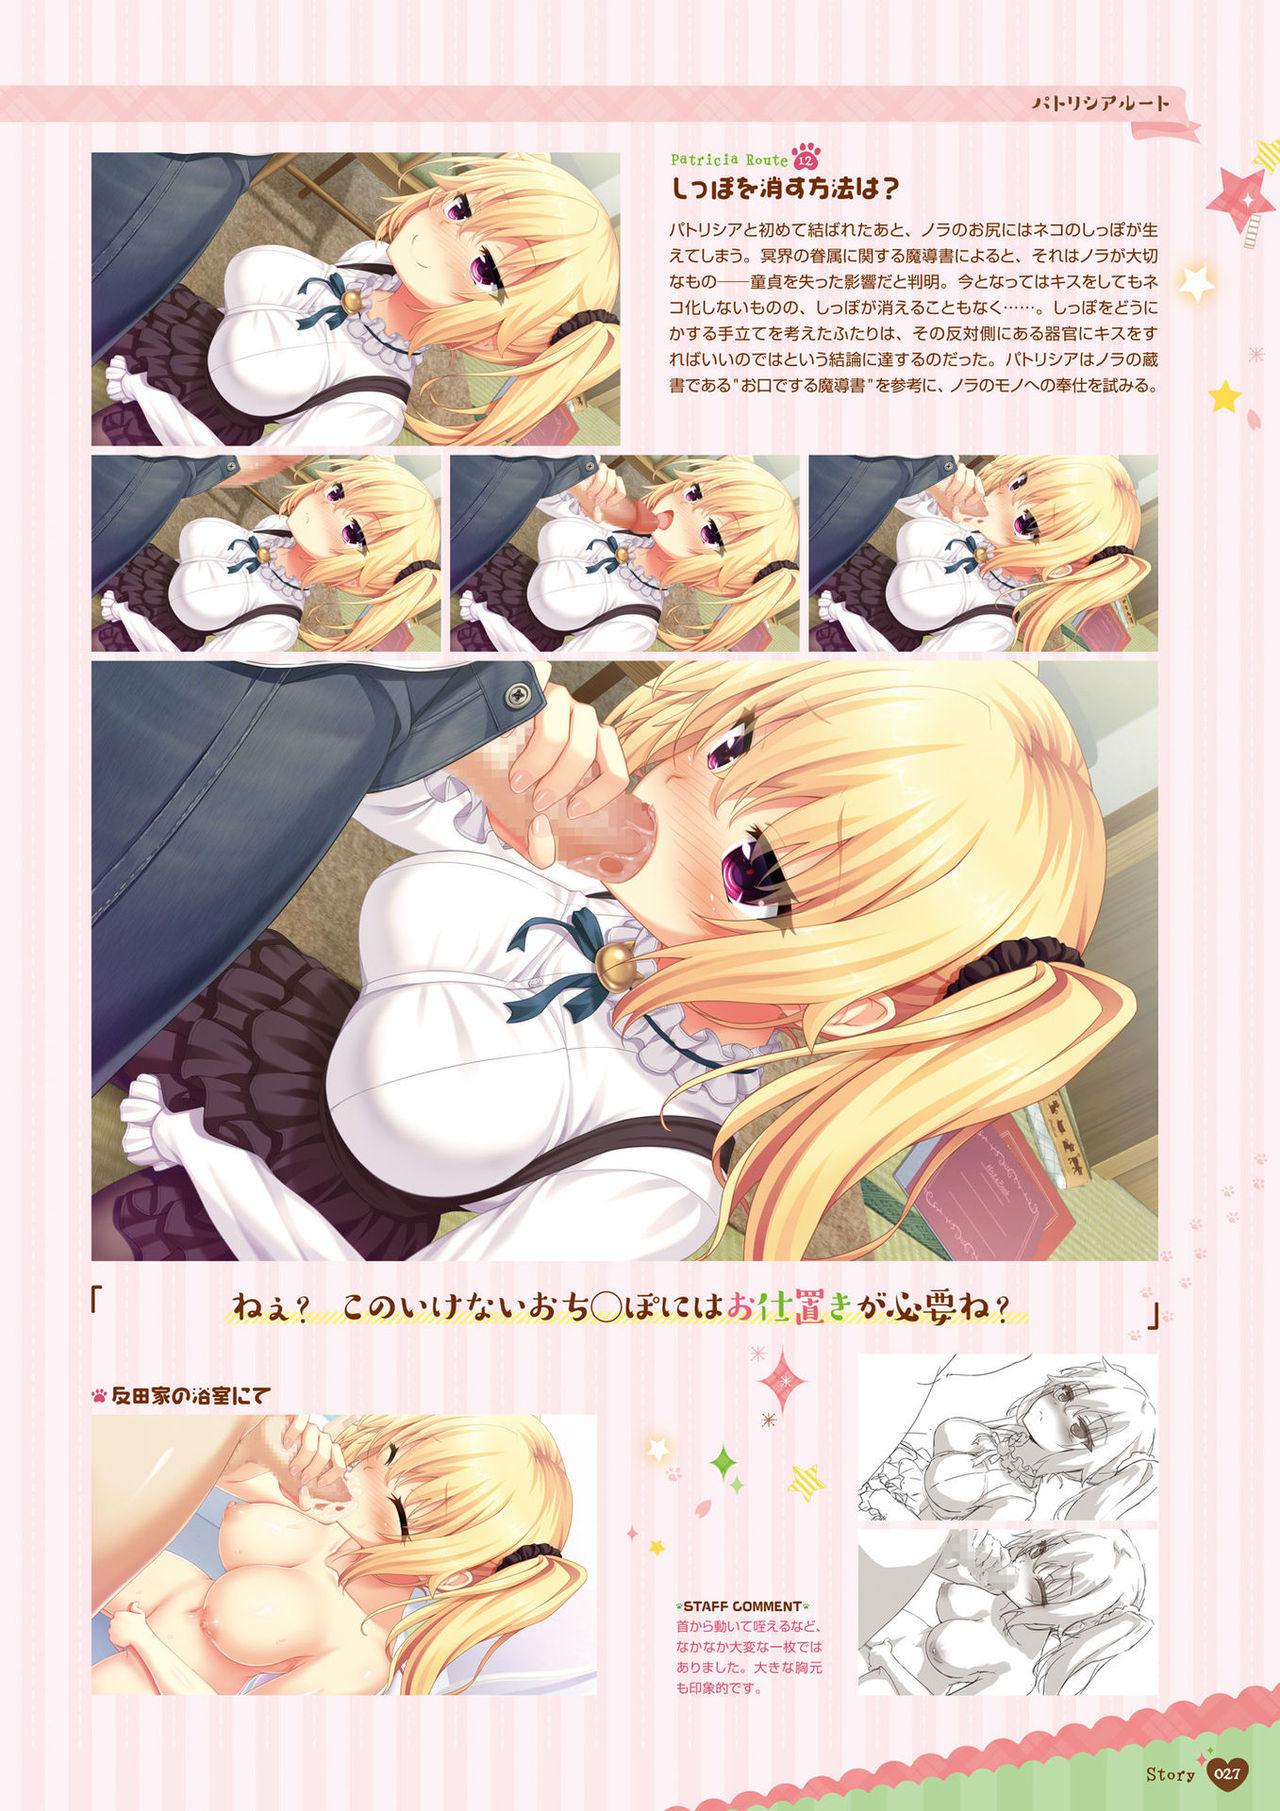 [HARUKAZE] Nora to Oujo to Noraneko Heart -Nora, Princess, and Stray Cat.- Visual Fan Book [Digital] 26